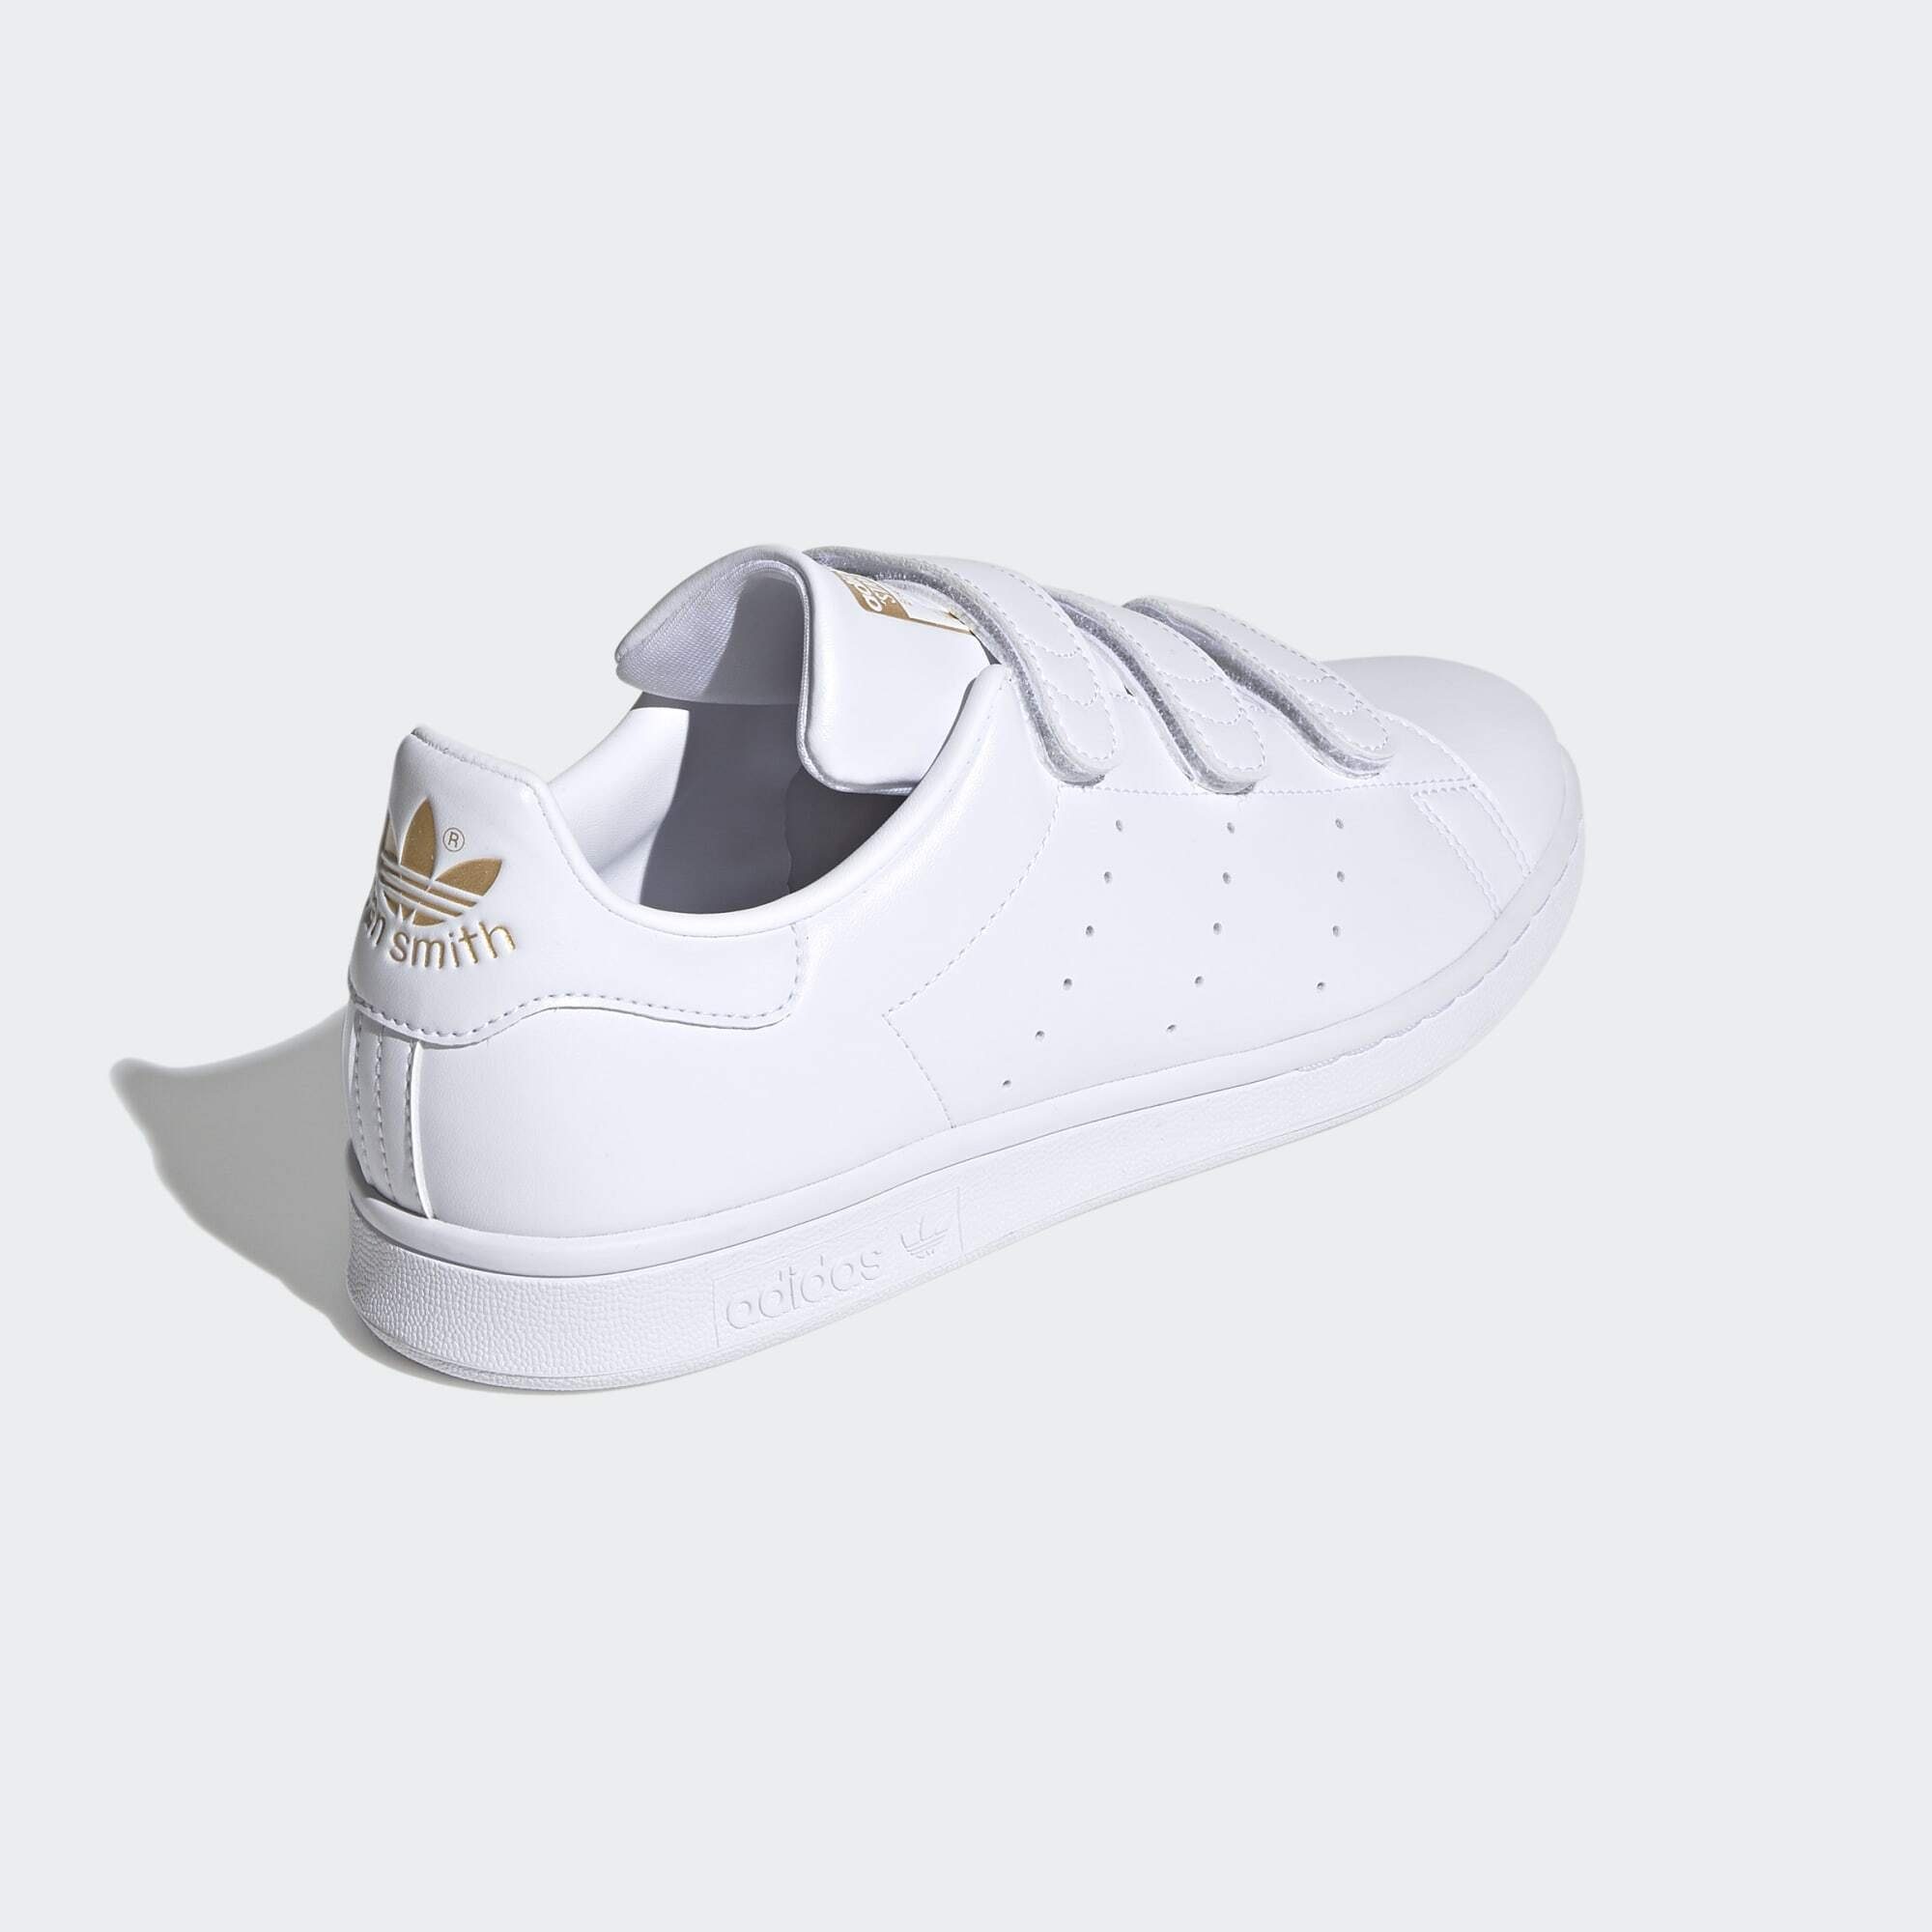 White Sneaker Cloud adidas White Originals / Cloud STAN Metallic Gold / SCHUH SMITH